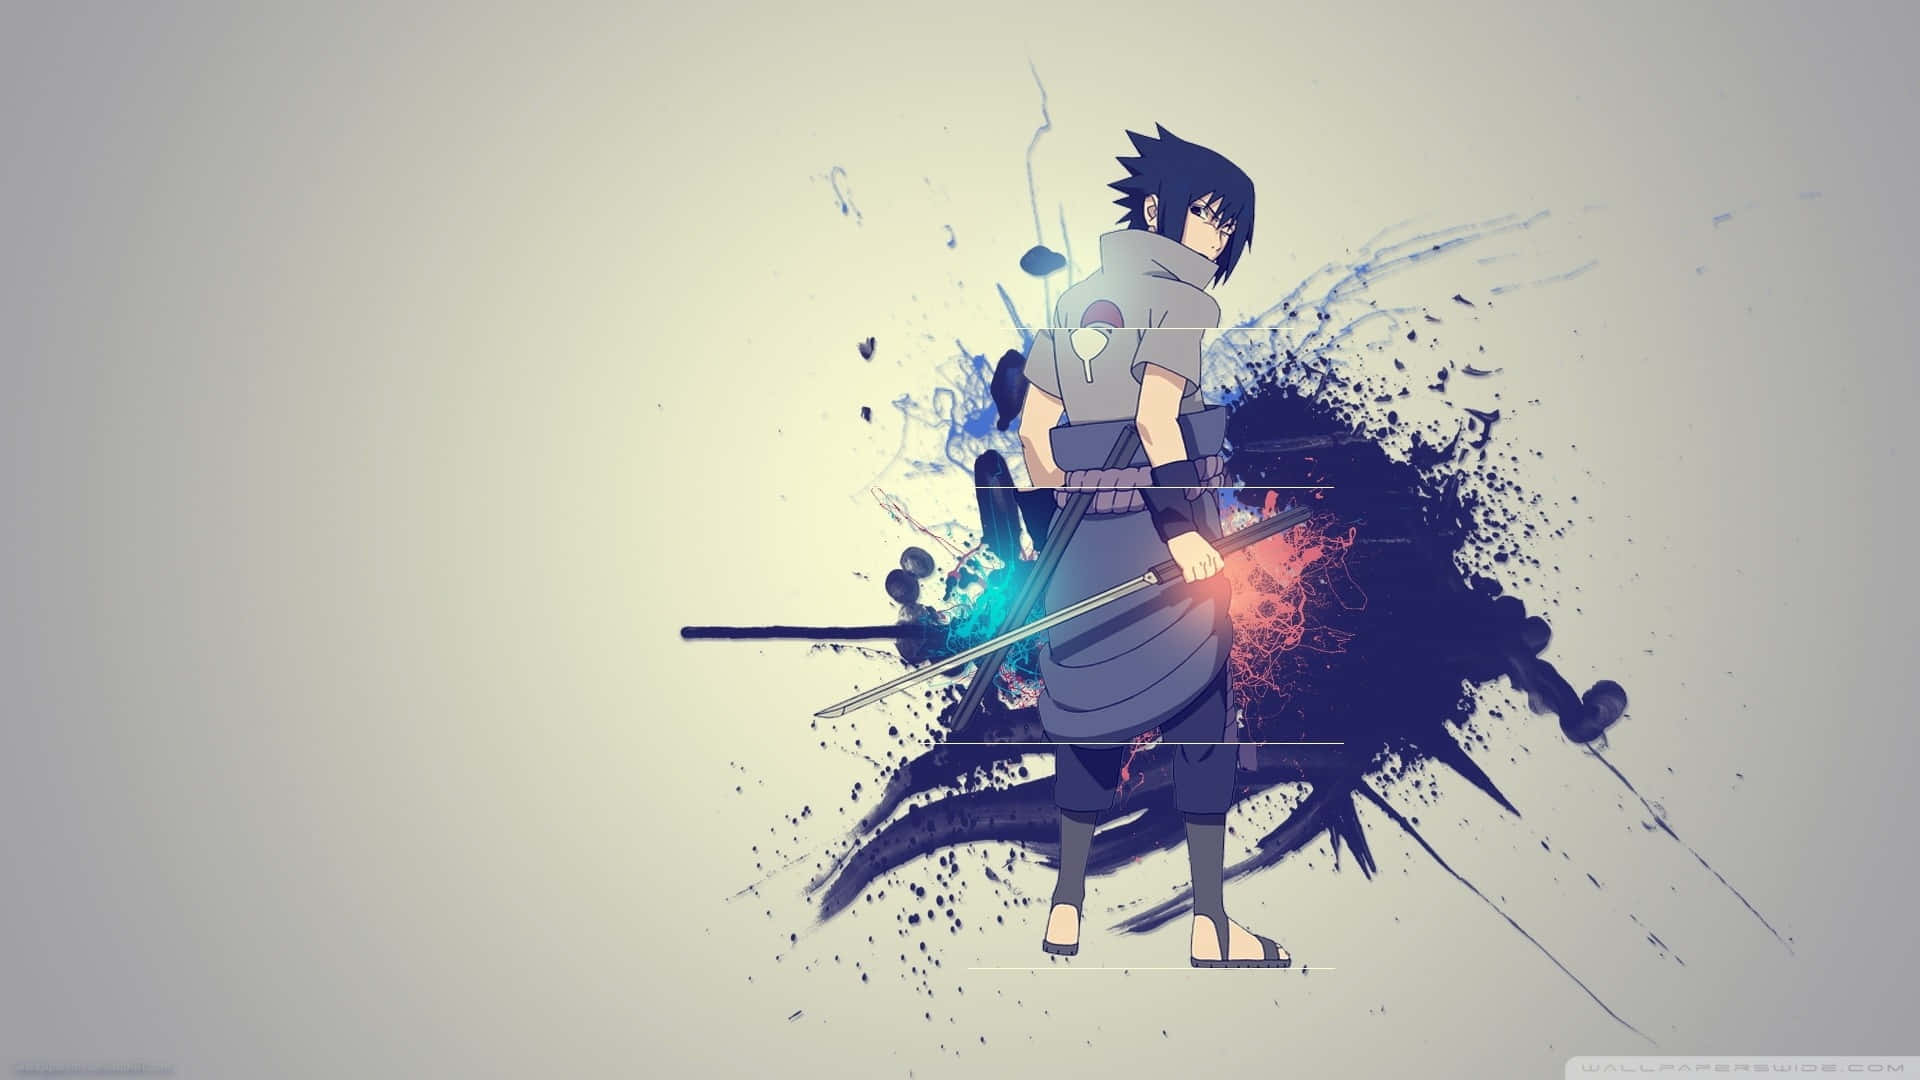 Summoning the power of the blue chakra, Sasuke unleashes a devastating attack. Wallpaper